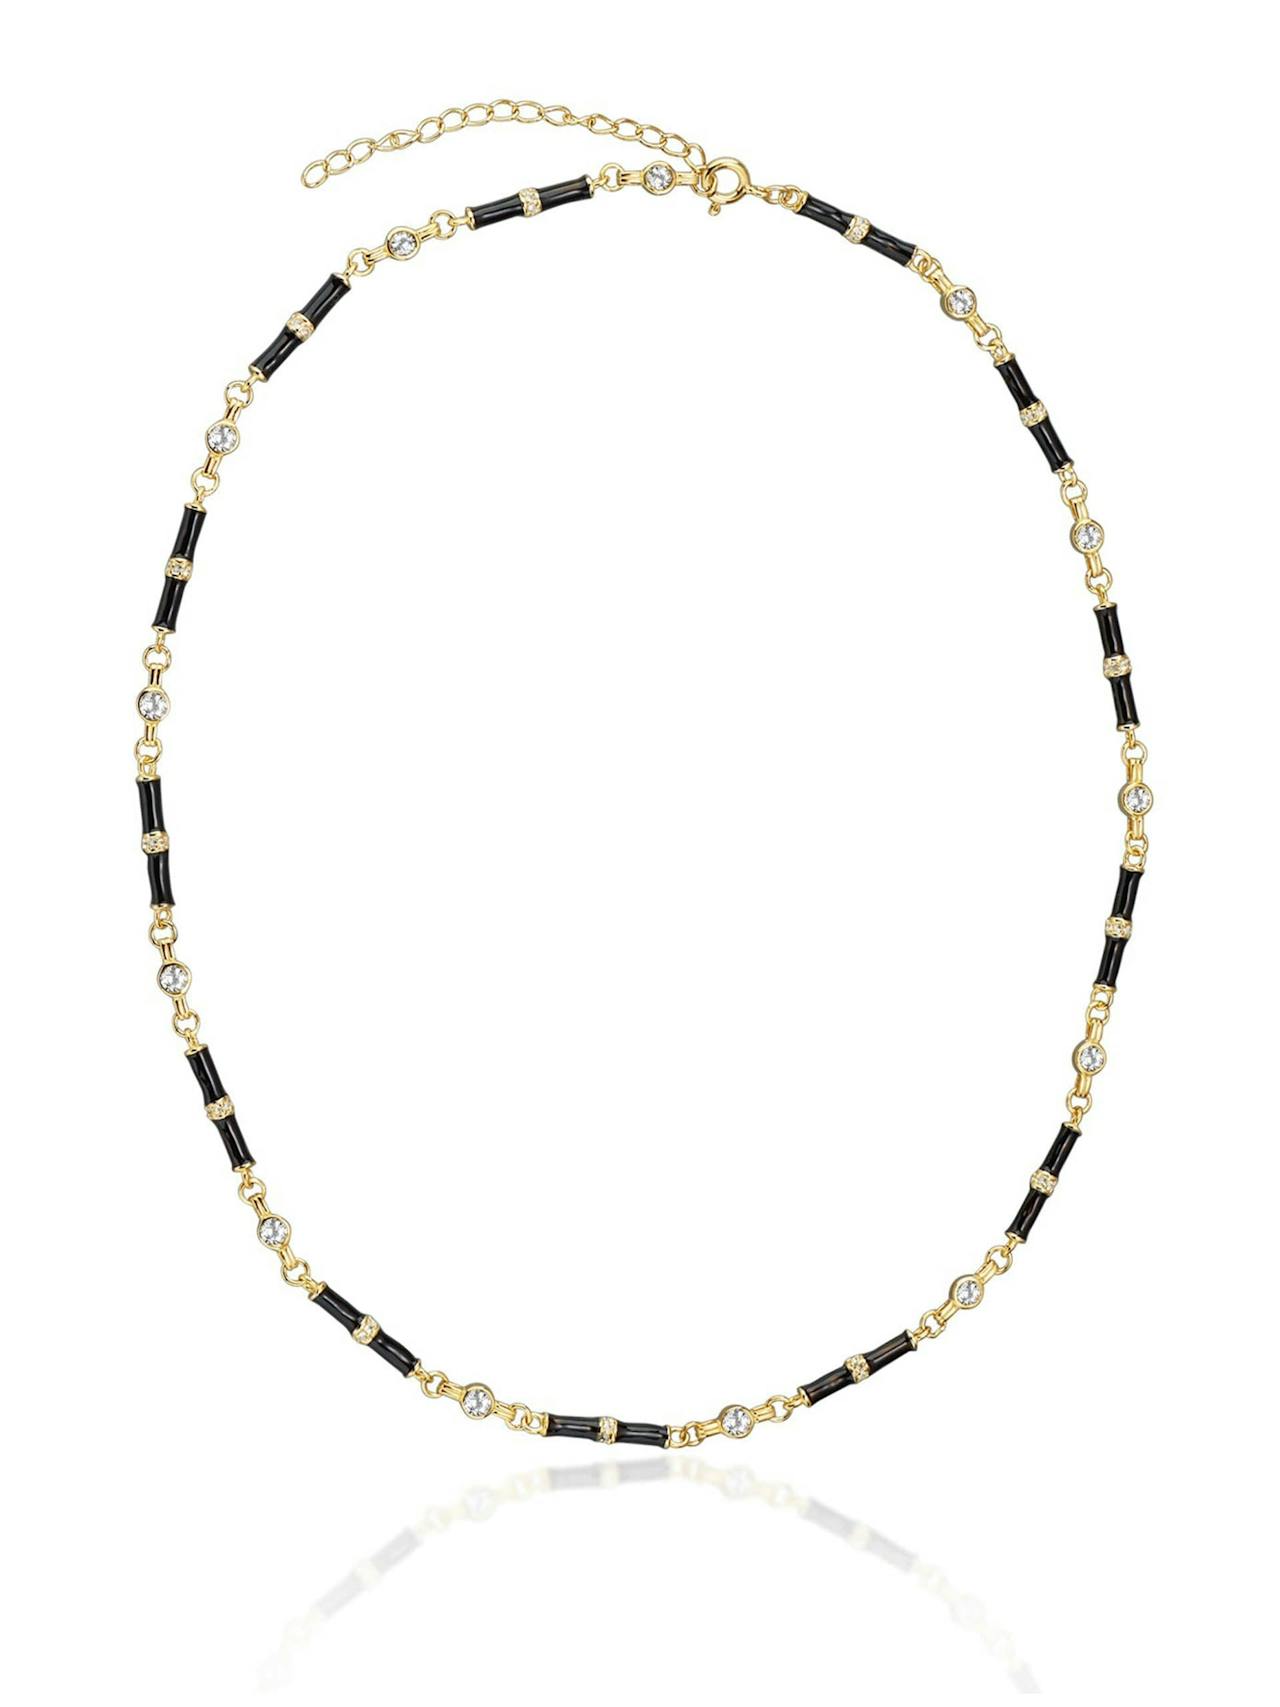 Black enamel Marlowe necklace with white topaz